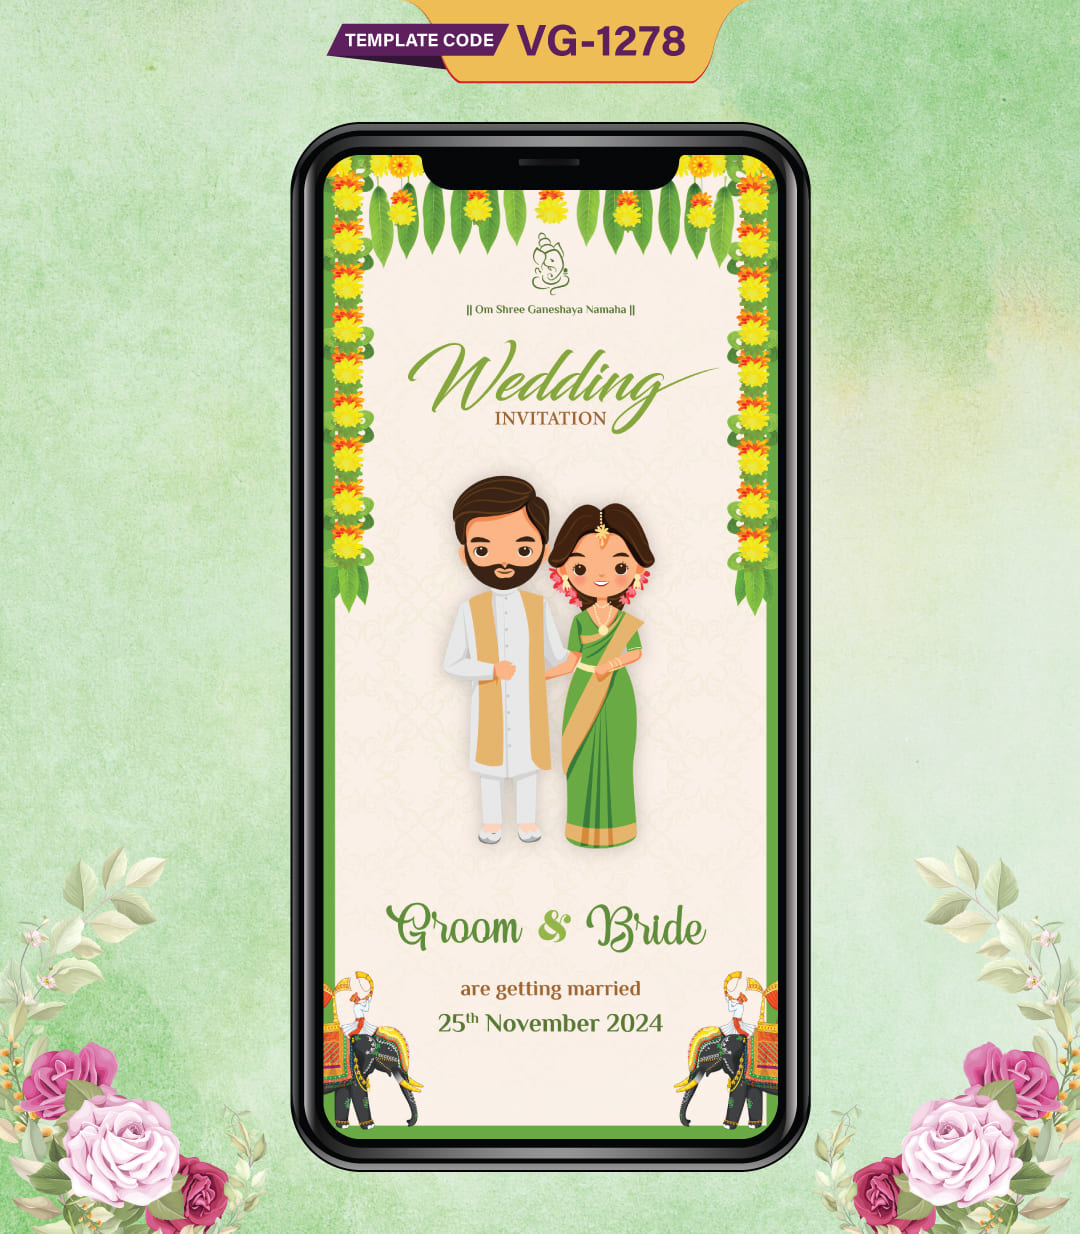 Cute Bride And Groom Wedding Invitation Card